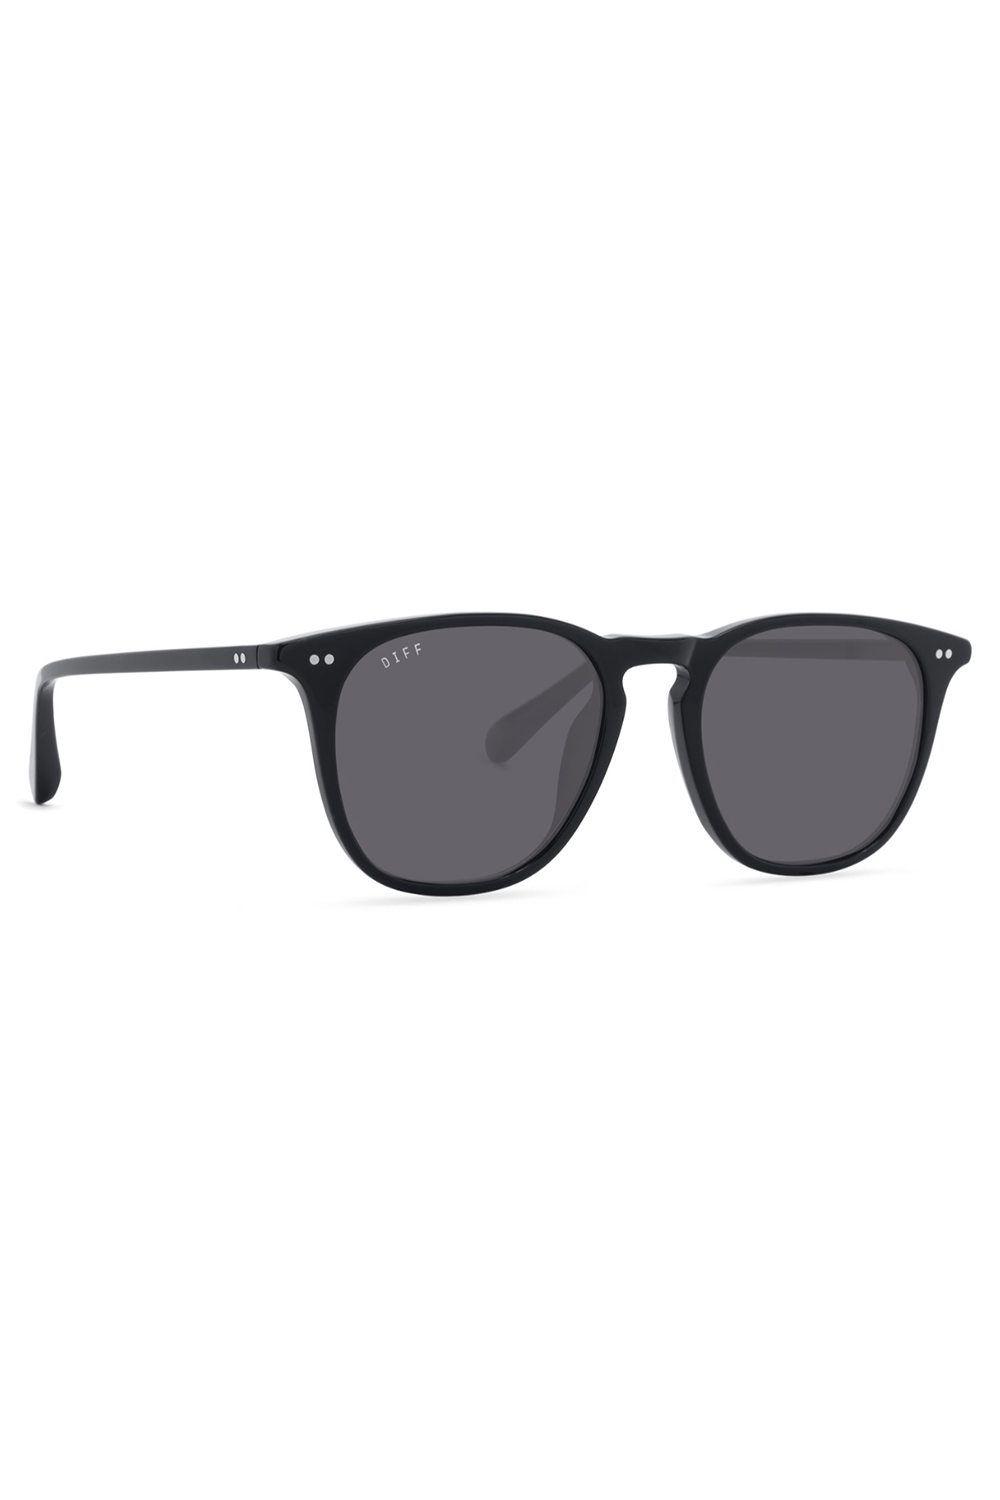 Maxwell Sunglasses - Black Grey